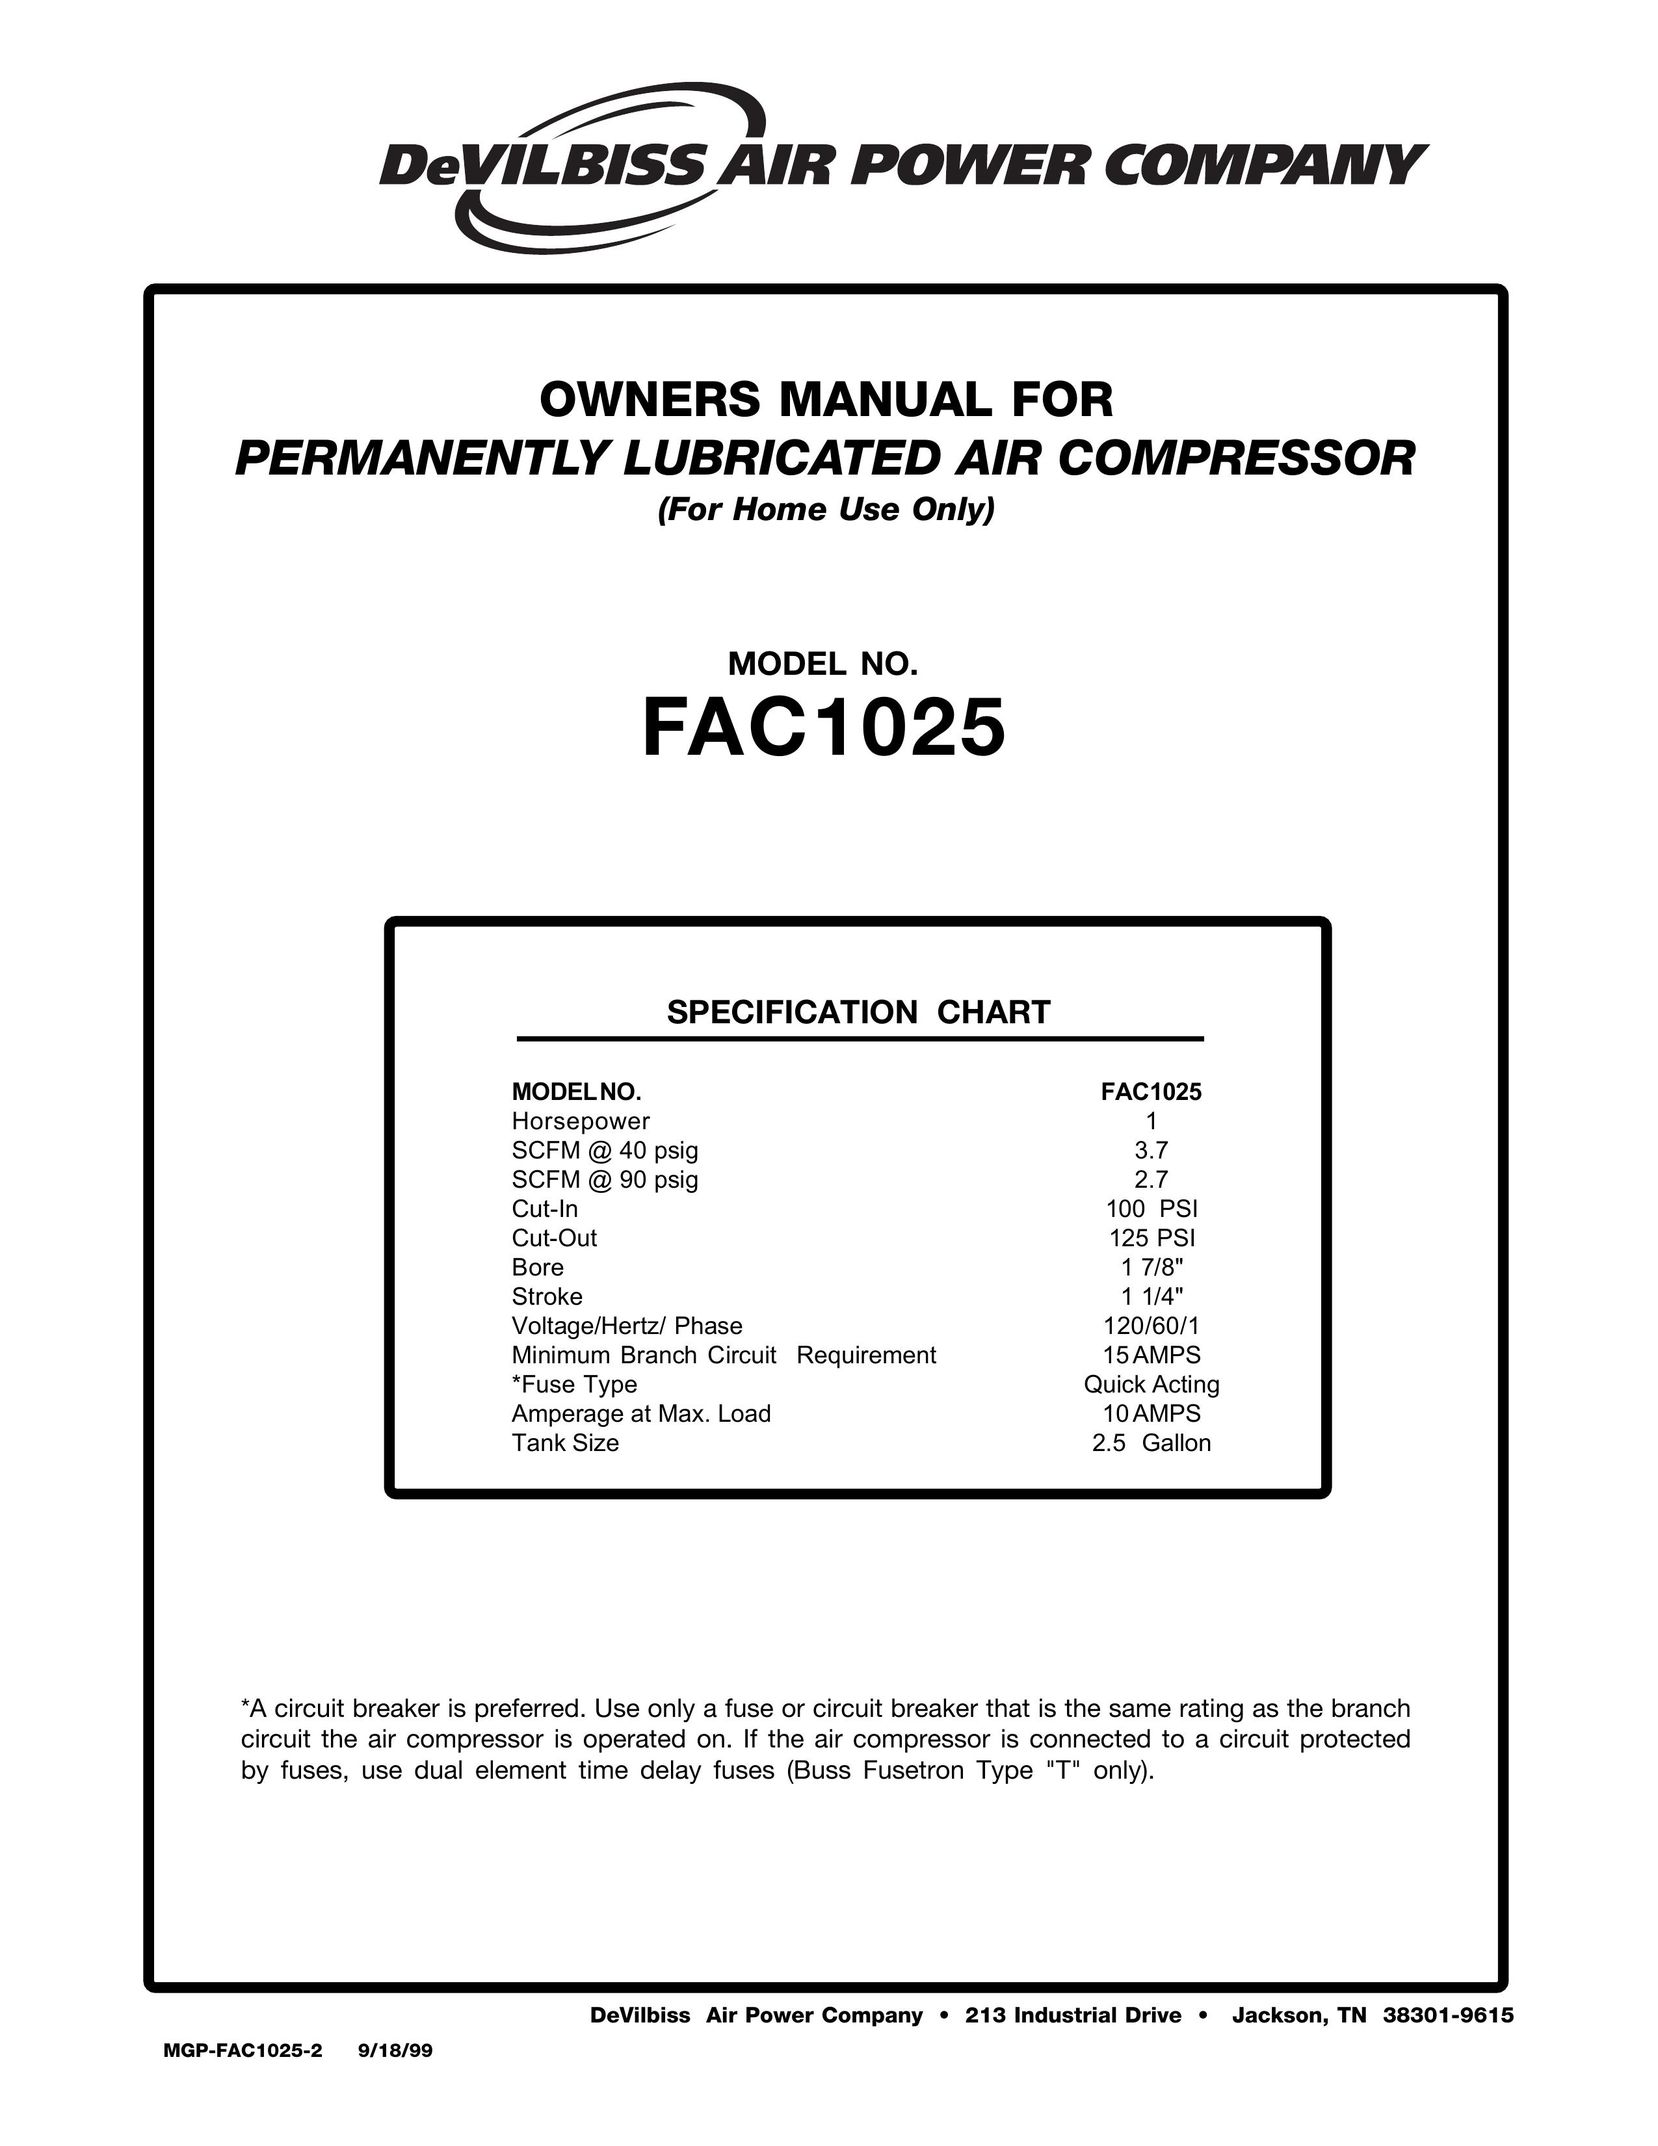 DeVillbiss Air Power Company FAC1025 Air Compressor User Manual